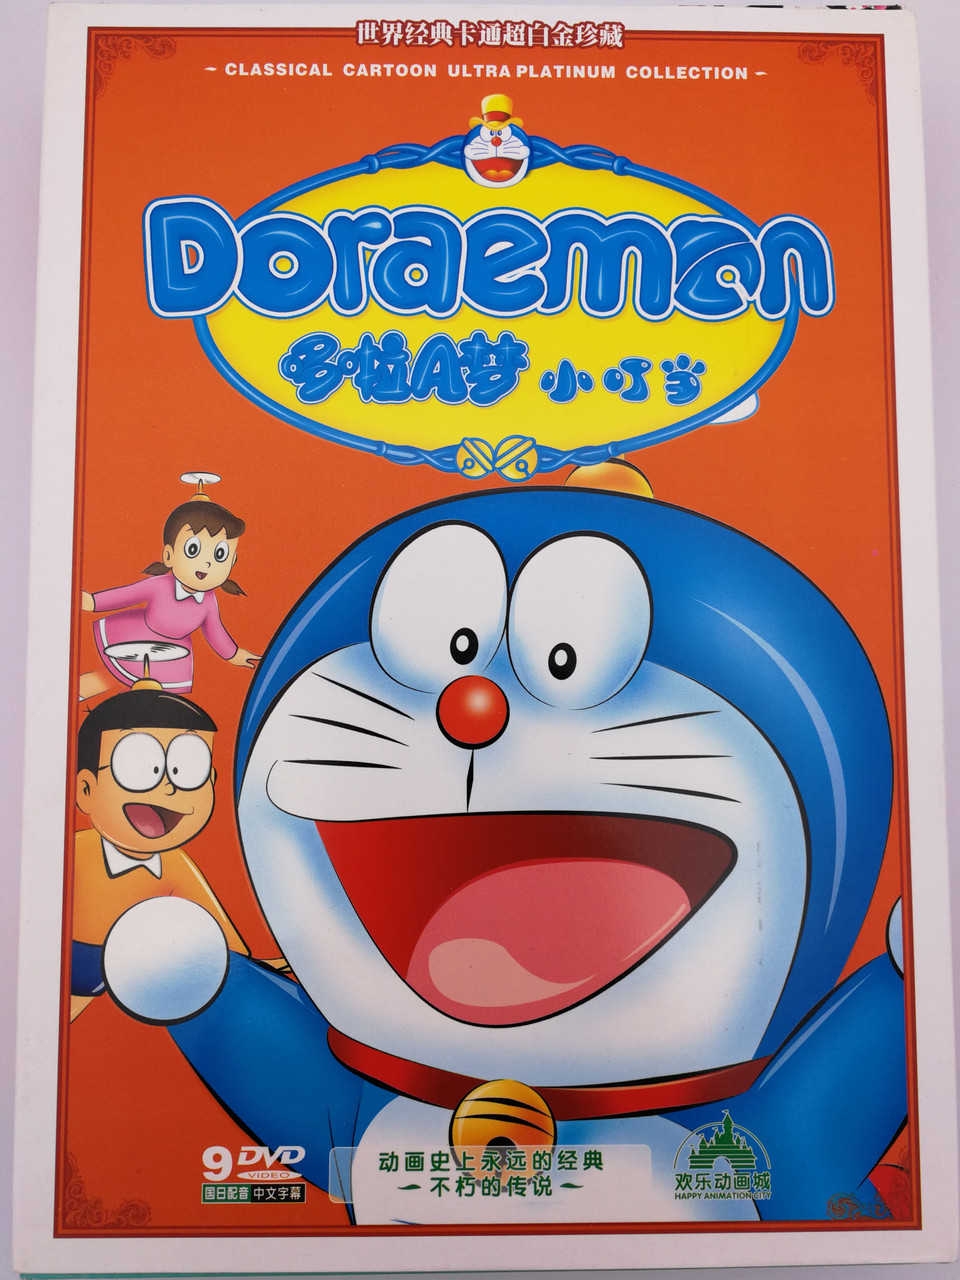 Doraemon 9DVD BOX ドラえもん Classical cartoon ultra platinum collection /  Written by Fujiko Fujio / Japanese Classic Anime series - 98 Episodes /  HK-1008 - bibleinmylanguage